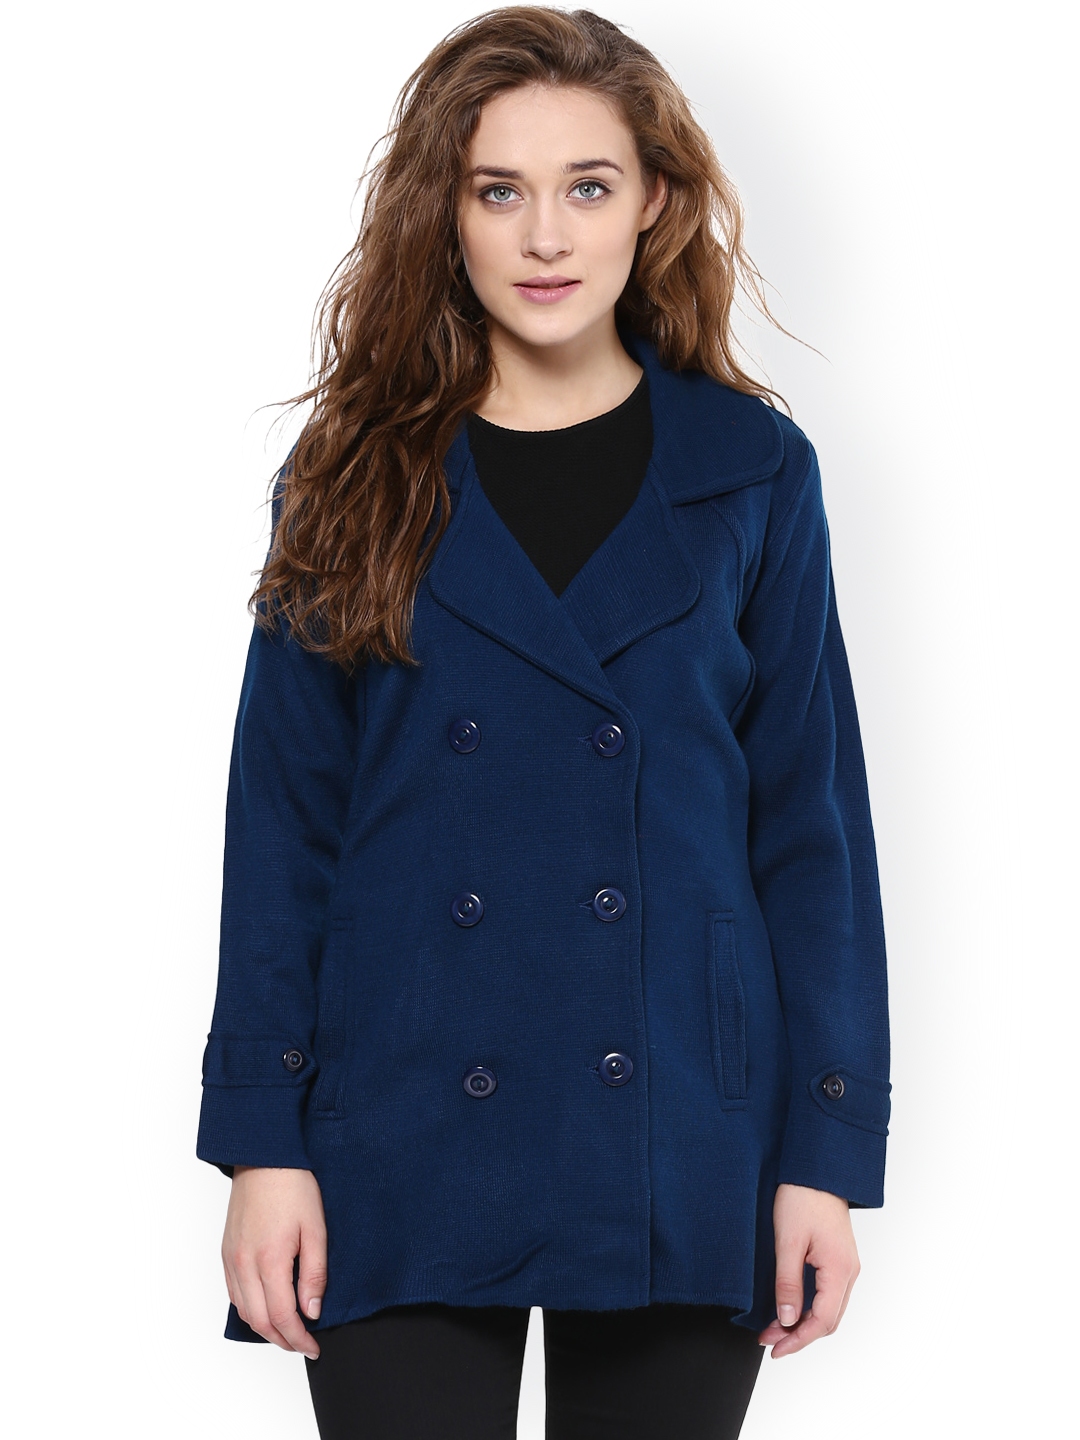 Buy Cayman Blue Coat - Coats for Women 1537752 | Myntra